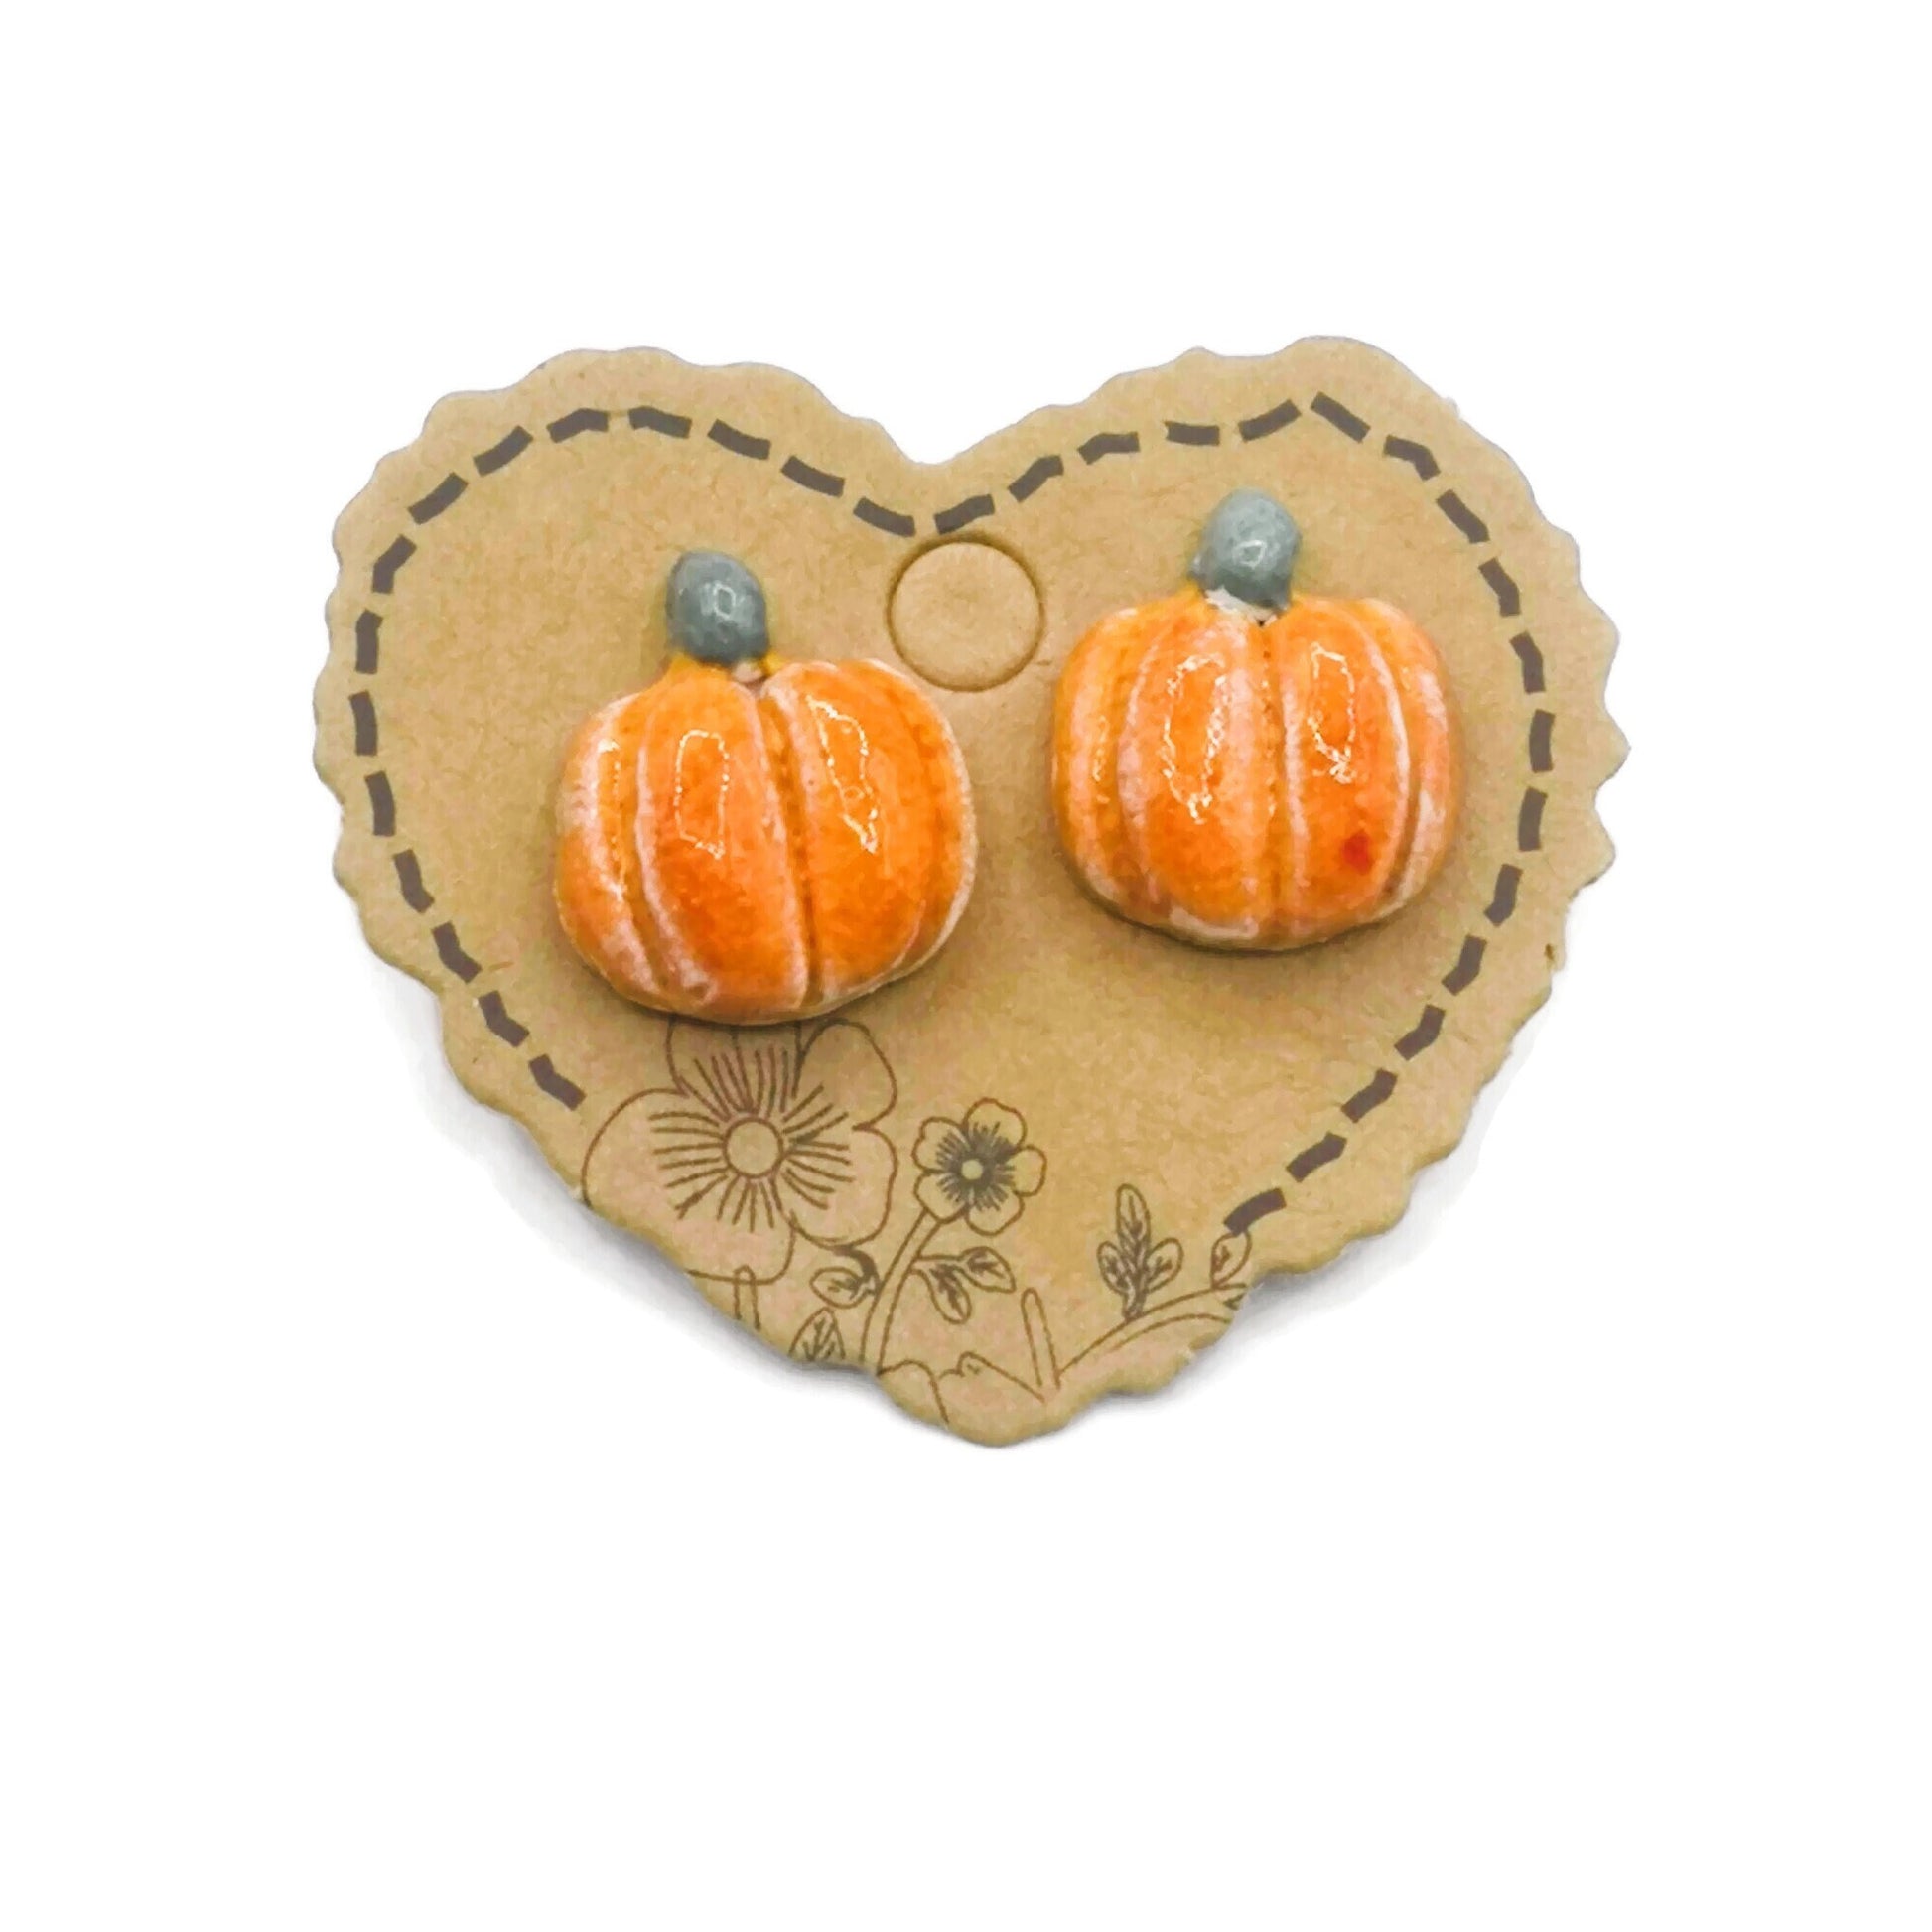 Handmade Ceramic Pumpkin Stud Earrings For Women- Orange Cute Halloween Jewelry Gift For Girls - Ceramica Ana Rafael